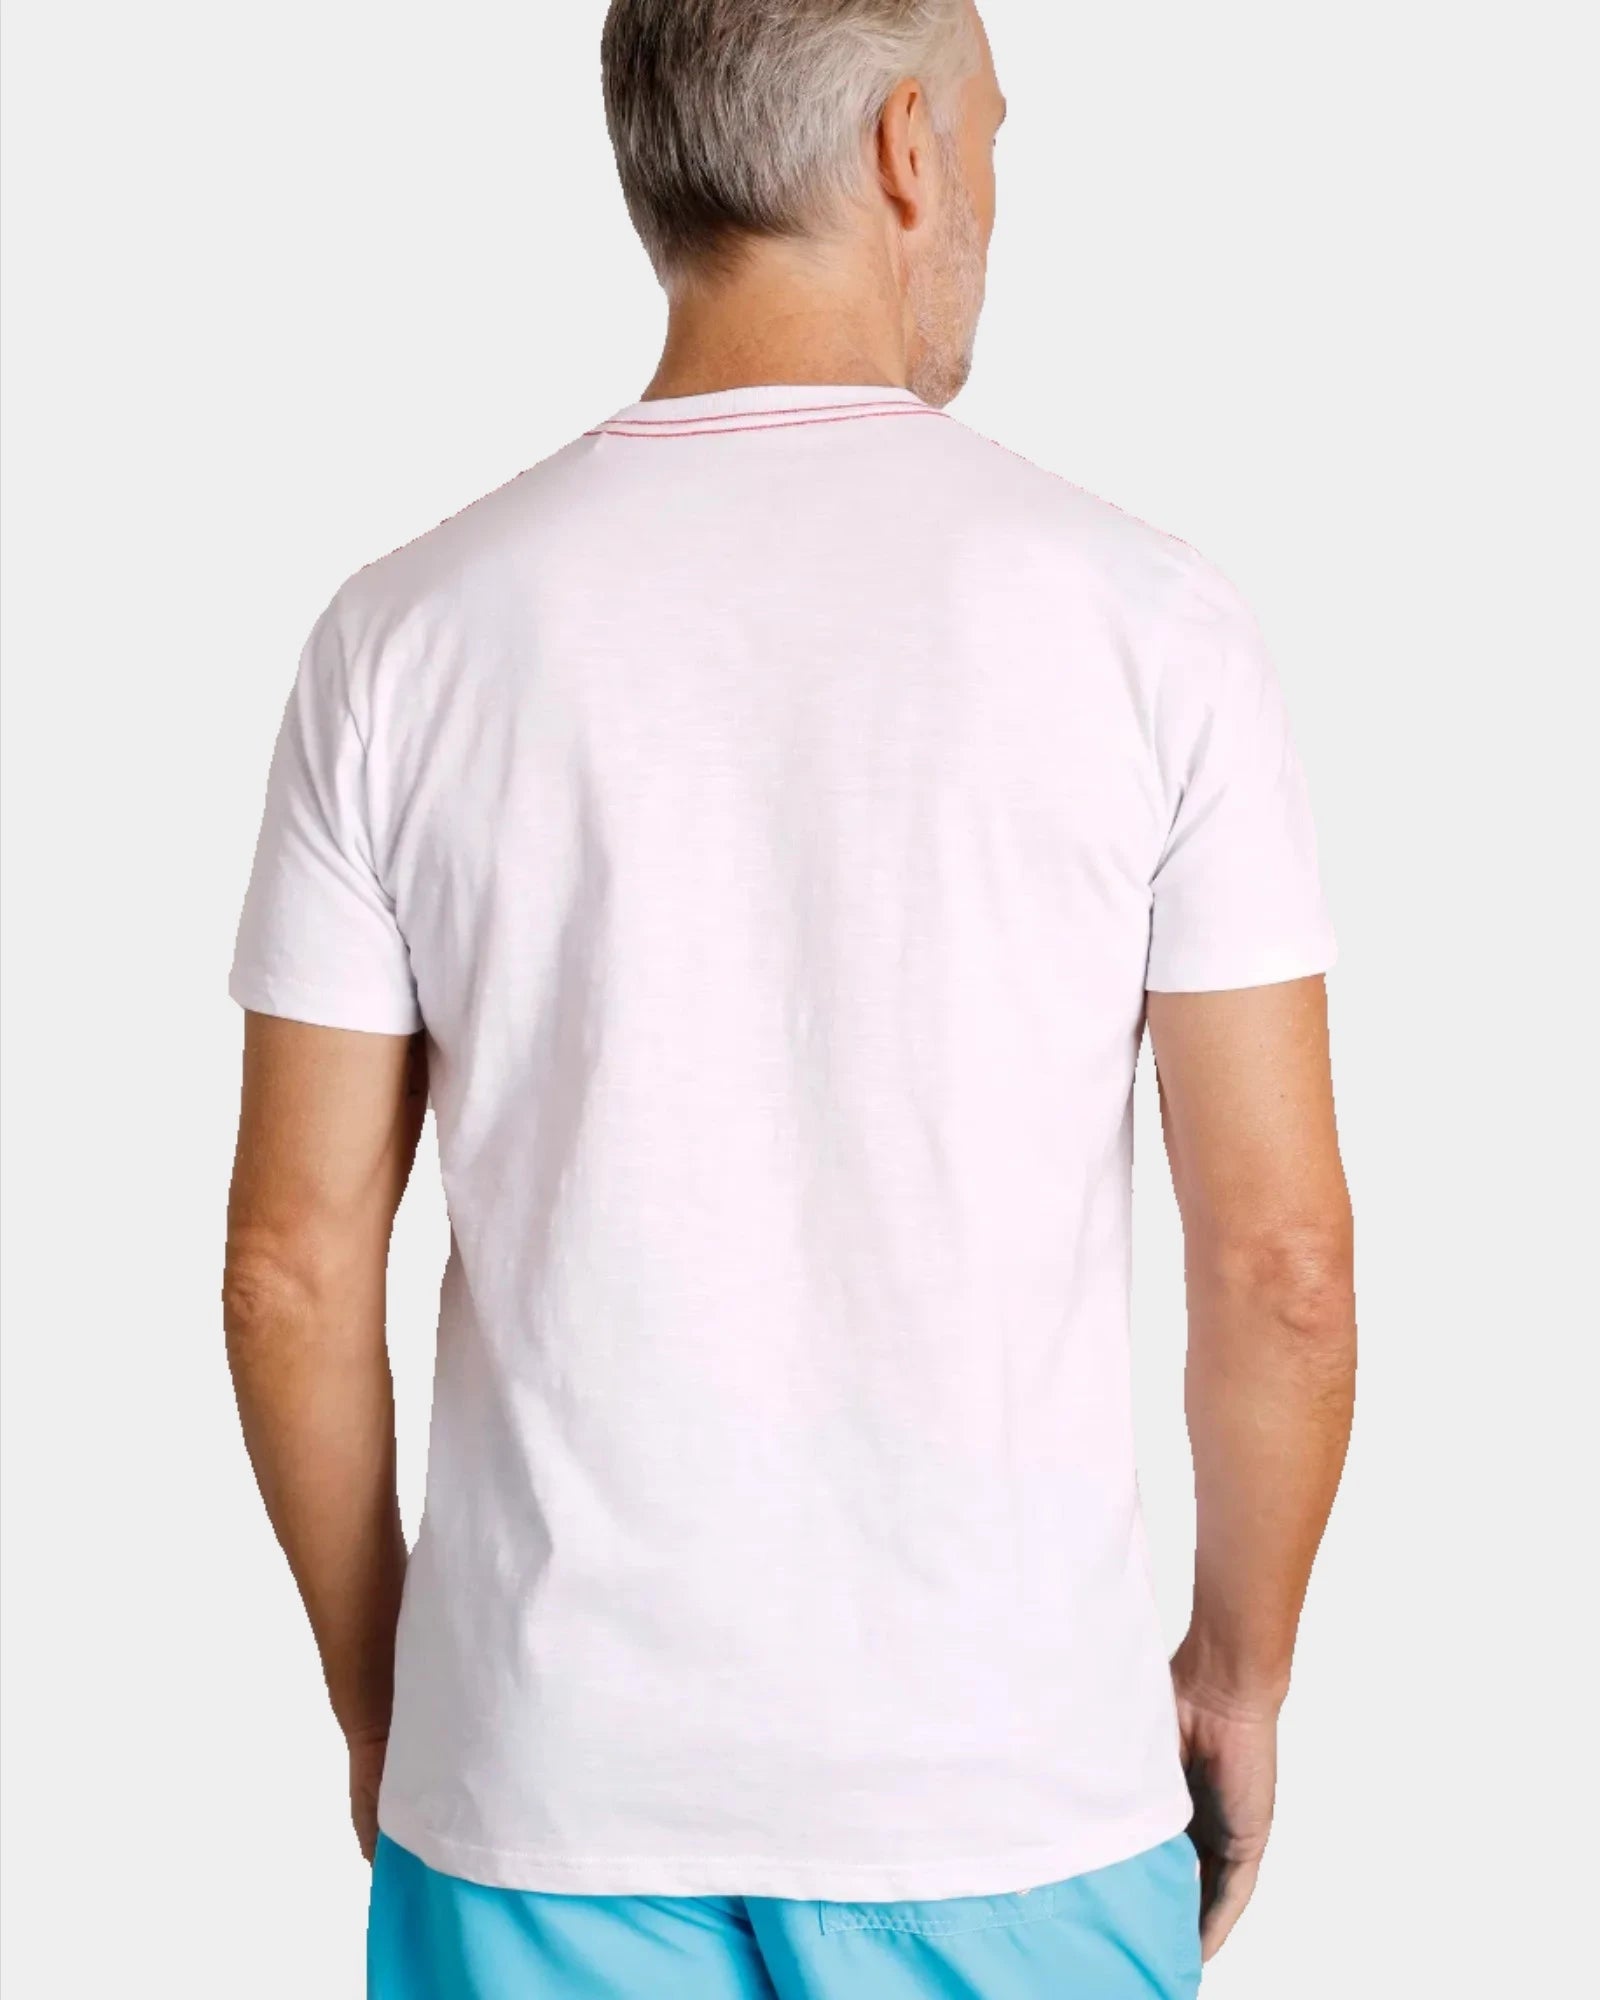 Fin White Organic Cotton Mixed Media T-Shirt